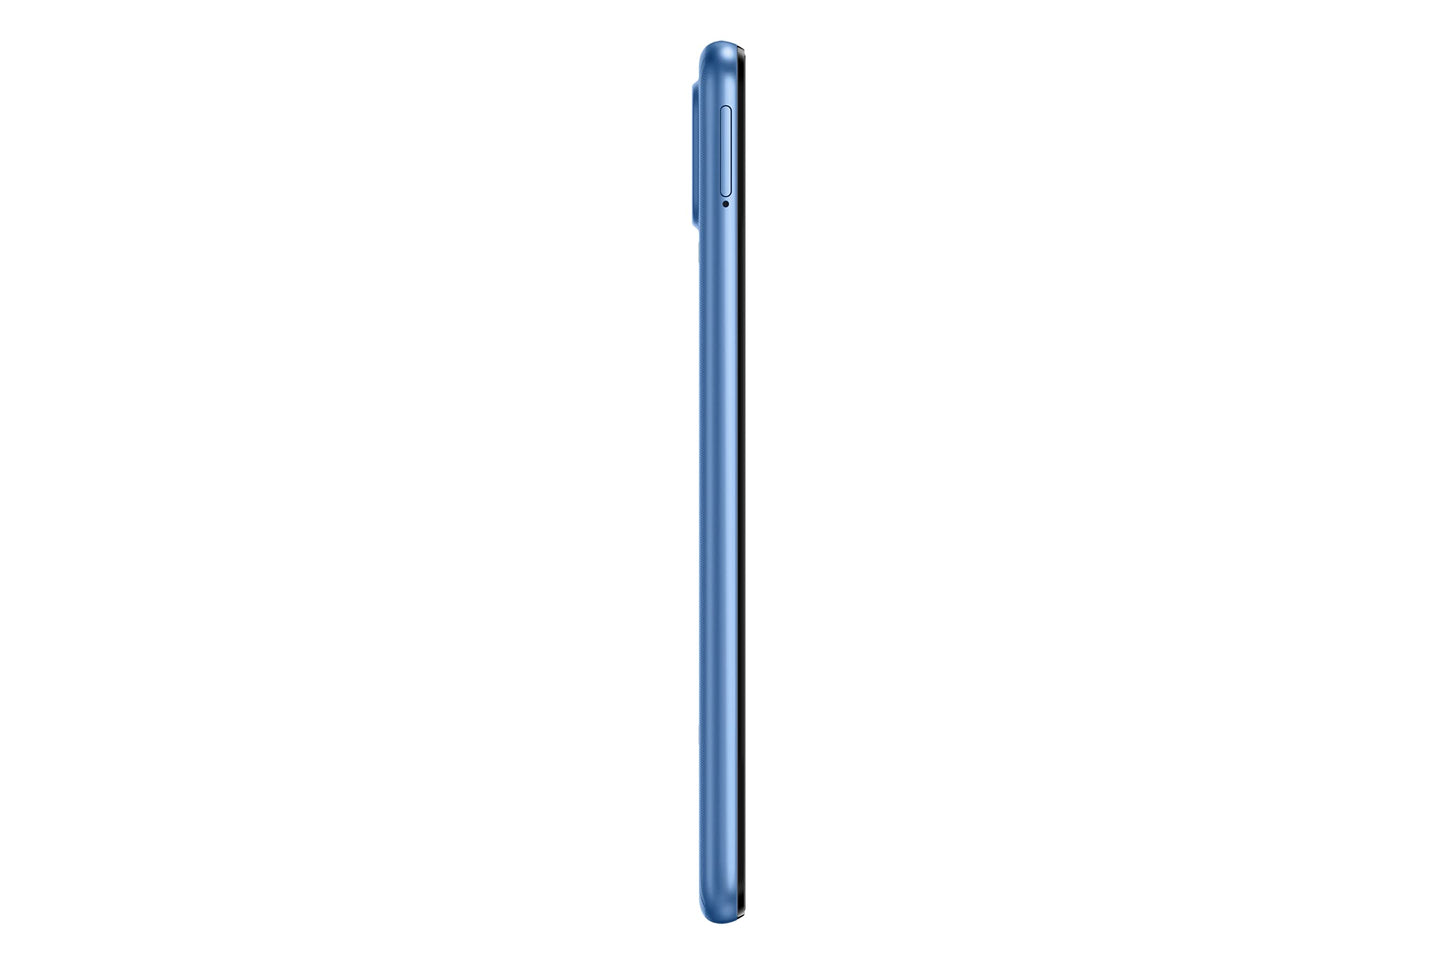 Samsung Galaxy M22 LTE Dual SIM Smartphone, 64GB Storage and 4GB RAM (UAE Version), Light Blue